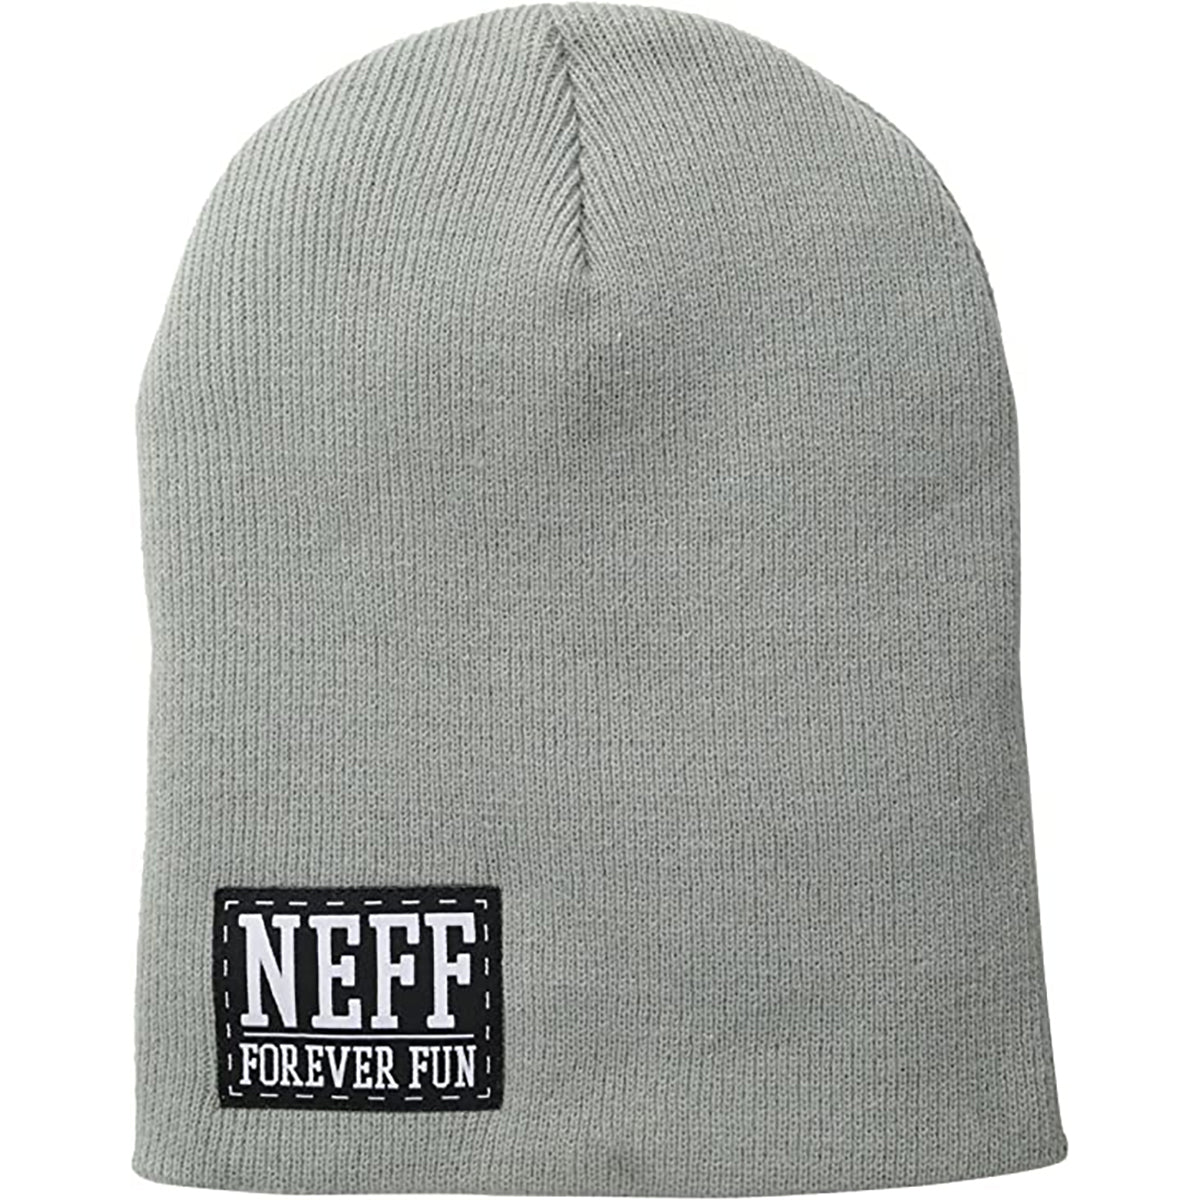 Neff Forever Fun Men's Beanie Hats (New - Flash Sale)